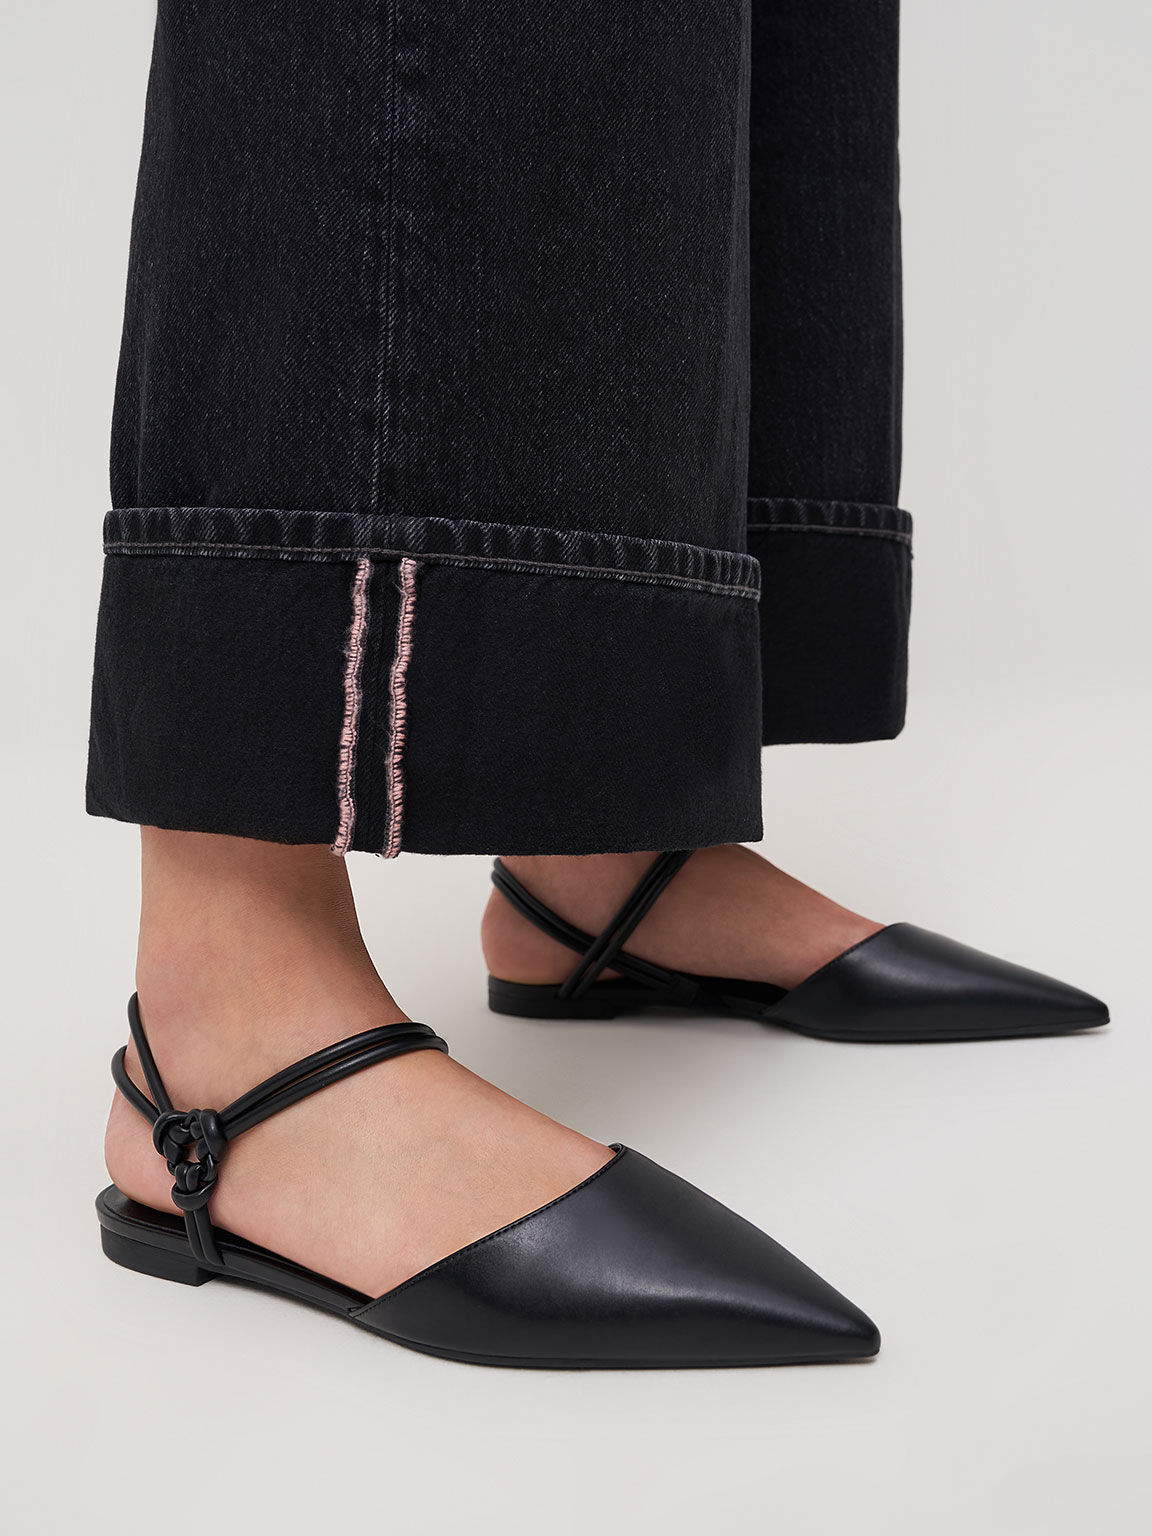 Knotted Ankle-Strap Ballerina Flats, Black, hi-res